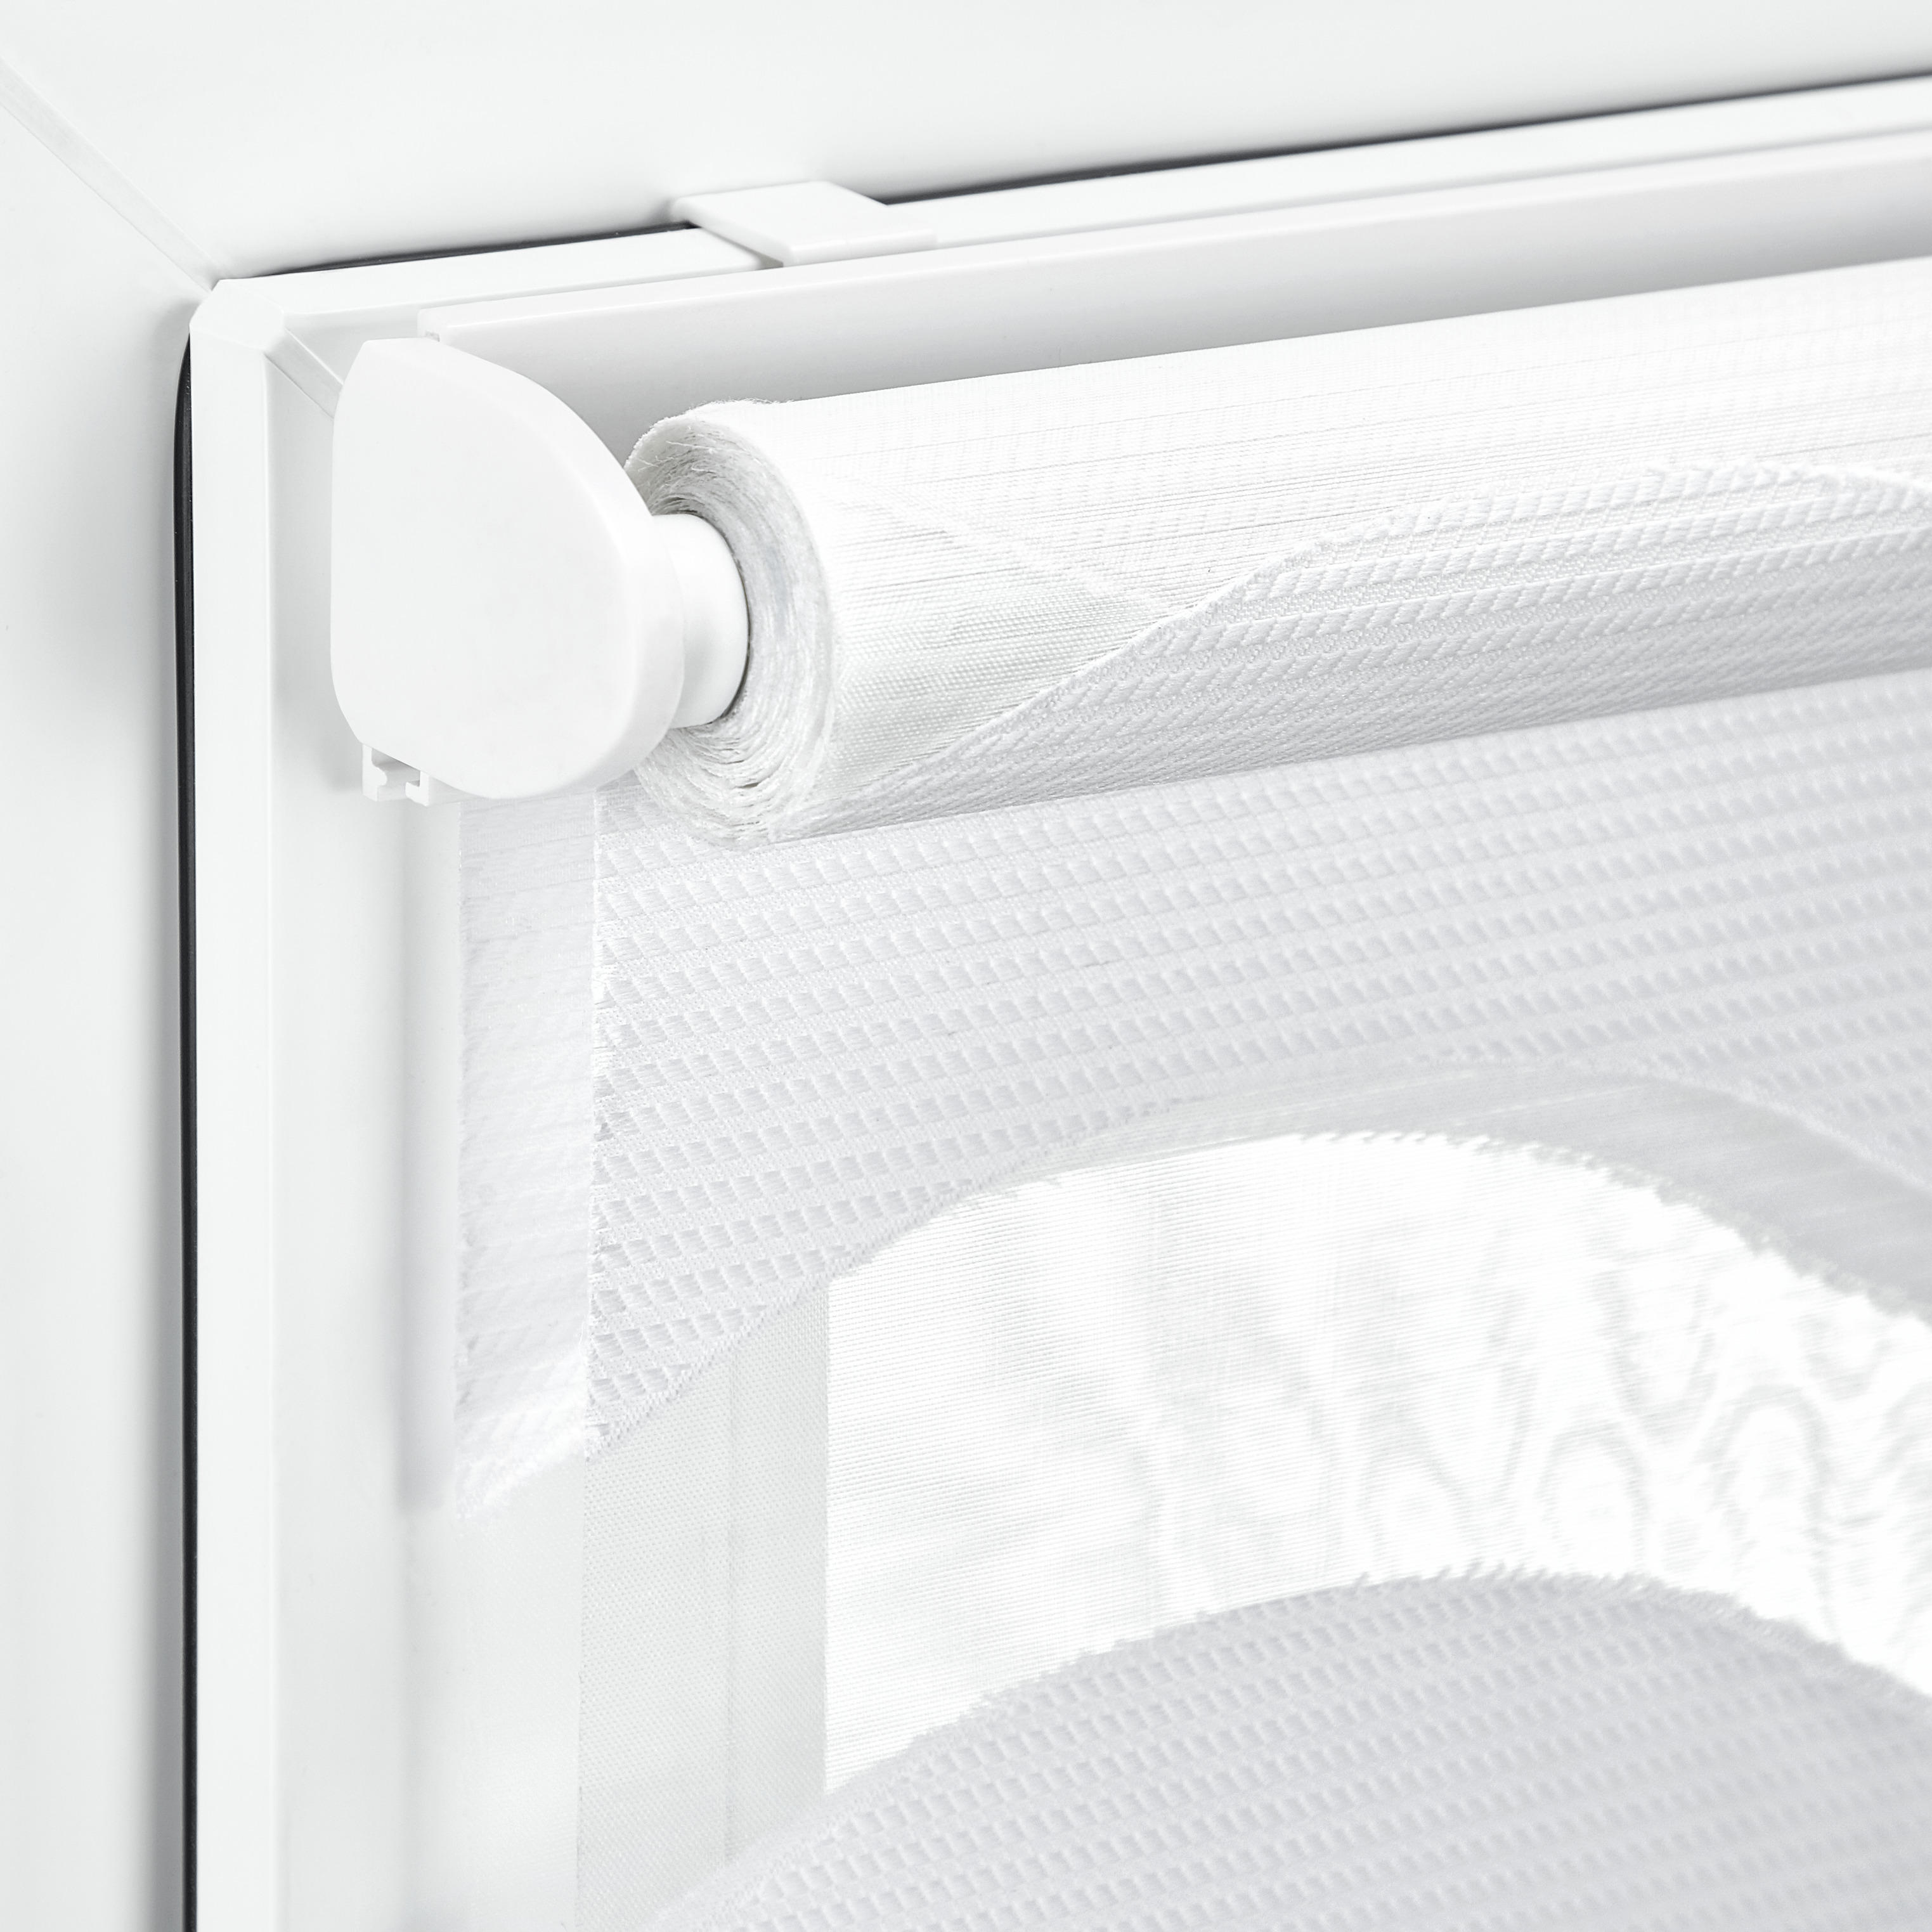 DOPPELROLLO  halbtransparent   100/160 cm   - Weiß, Design, Kunststoff (100/160cm) - Homeware